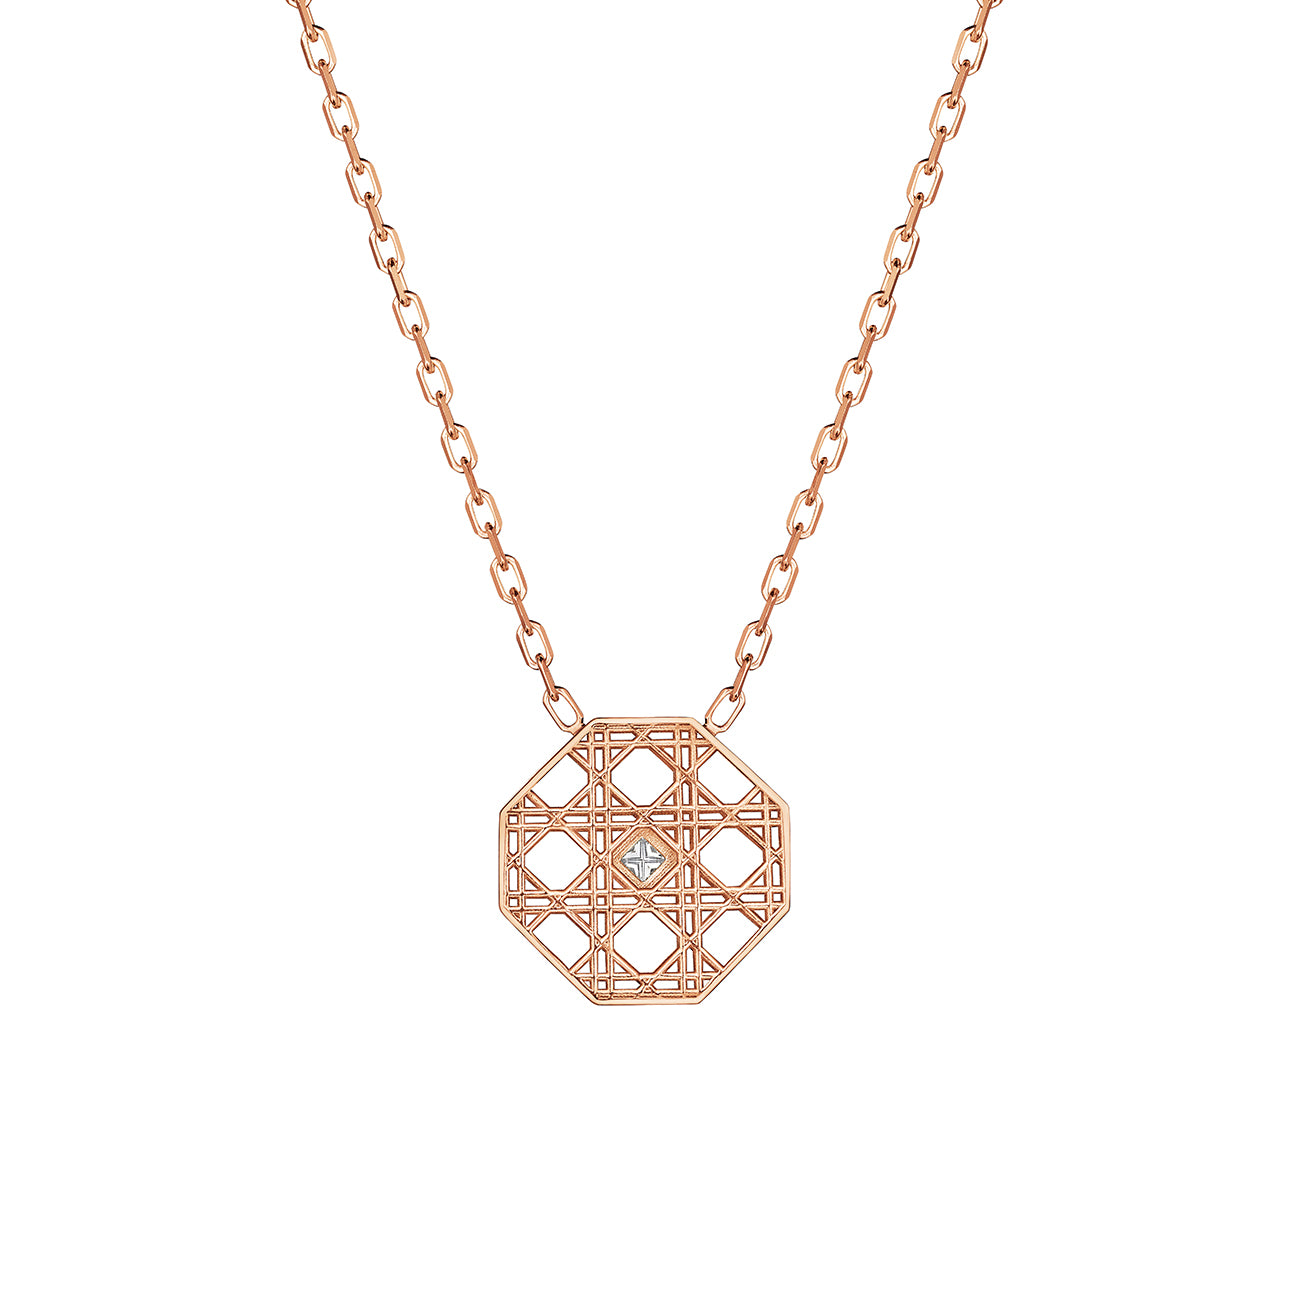 DouDou Pendant necklace, 18K Rose Gold and Princess Cut Diamond